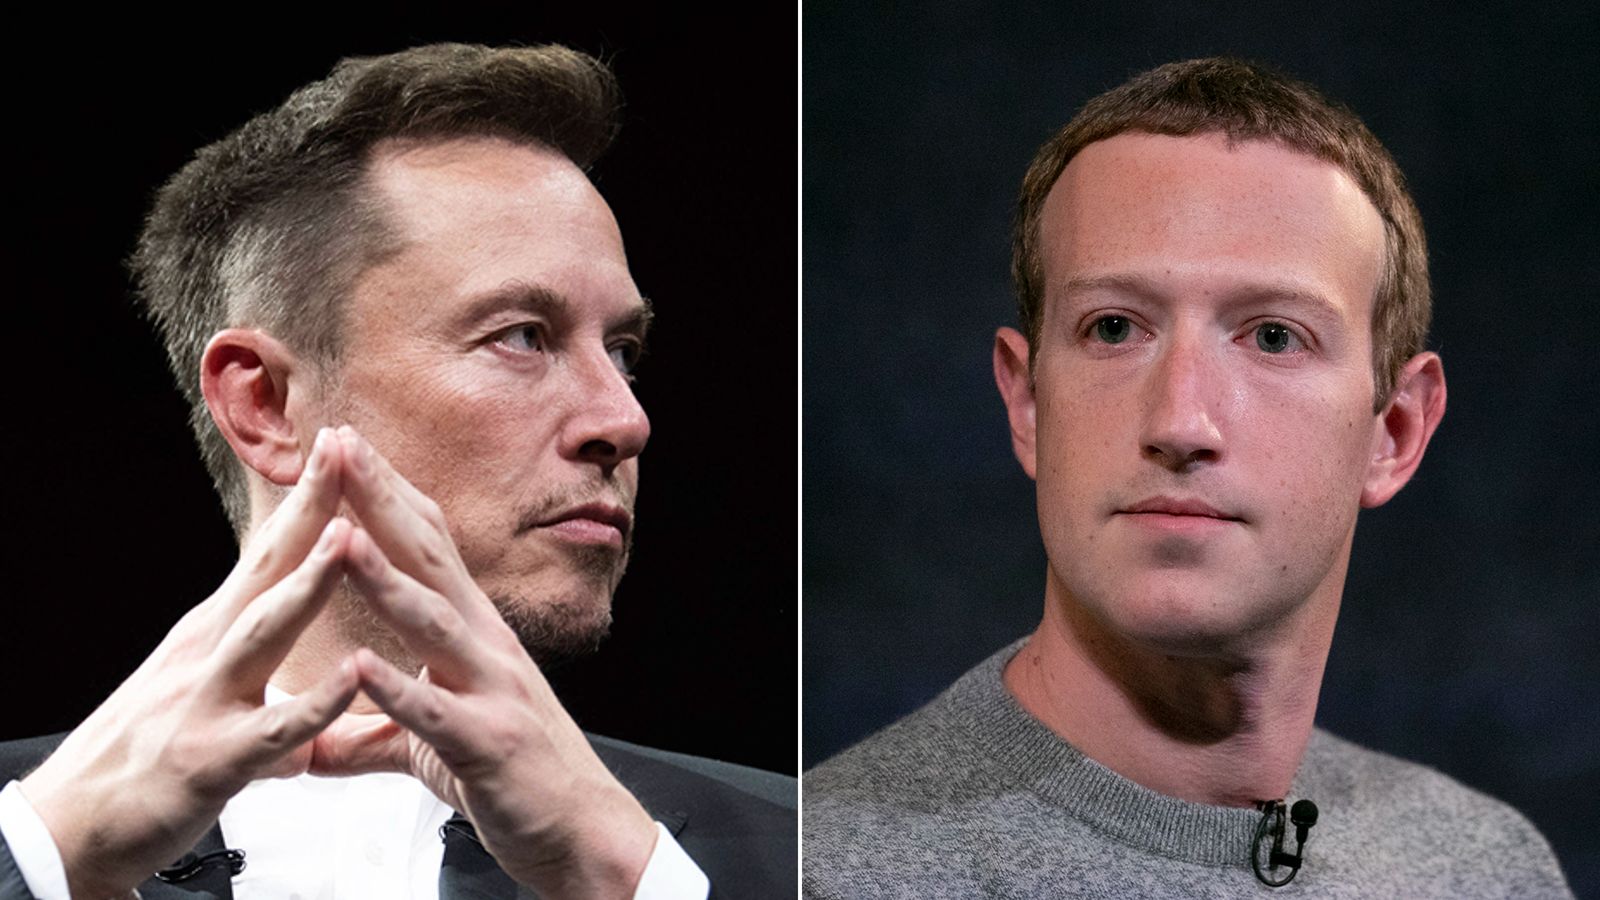 Zuckerberg Vs Musk: Disputes Heat Up Over Billionaire Cage Fight